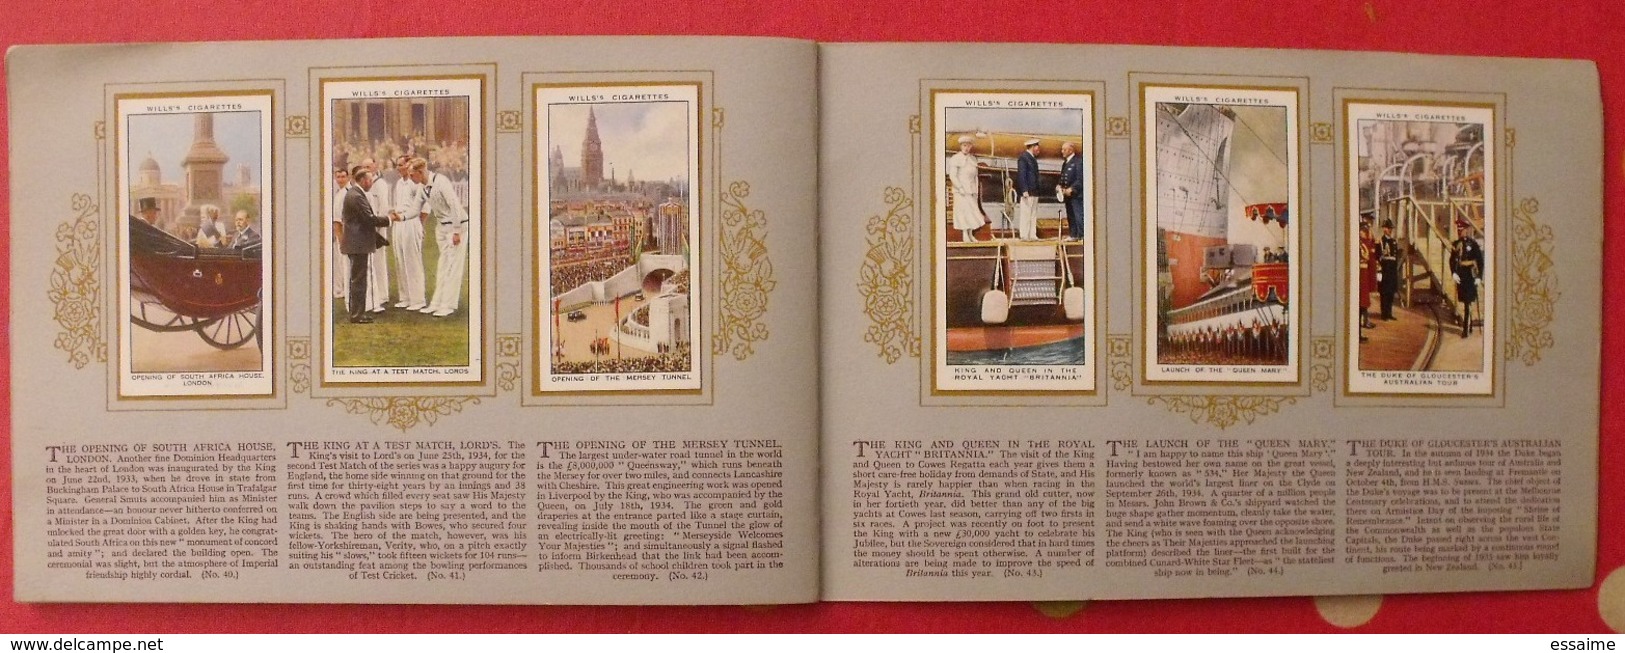 album d'images cigarette pictures wills's. en anglais. reign king George V. règne roi. 1935. 50 chromo